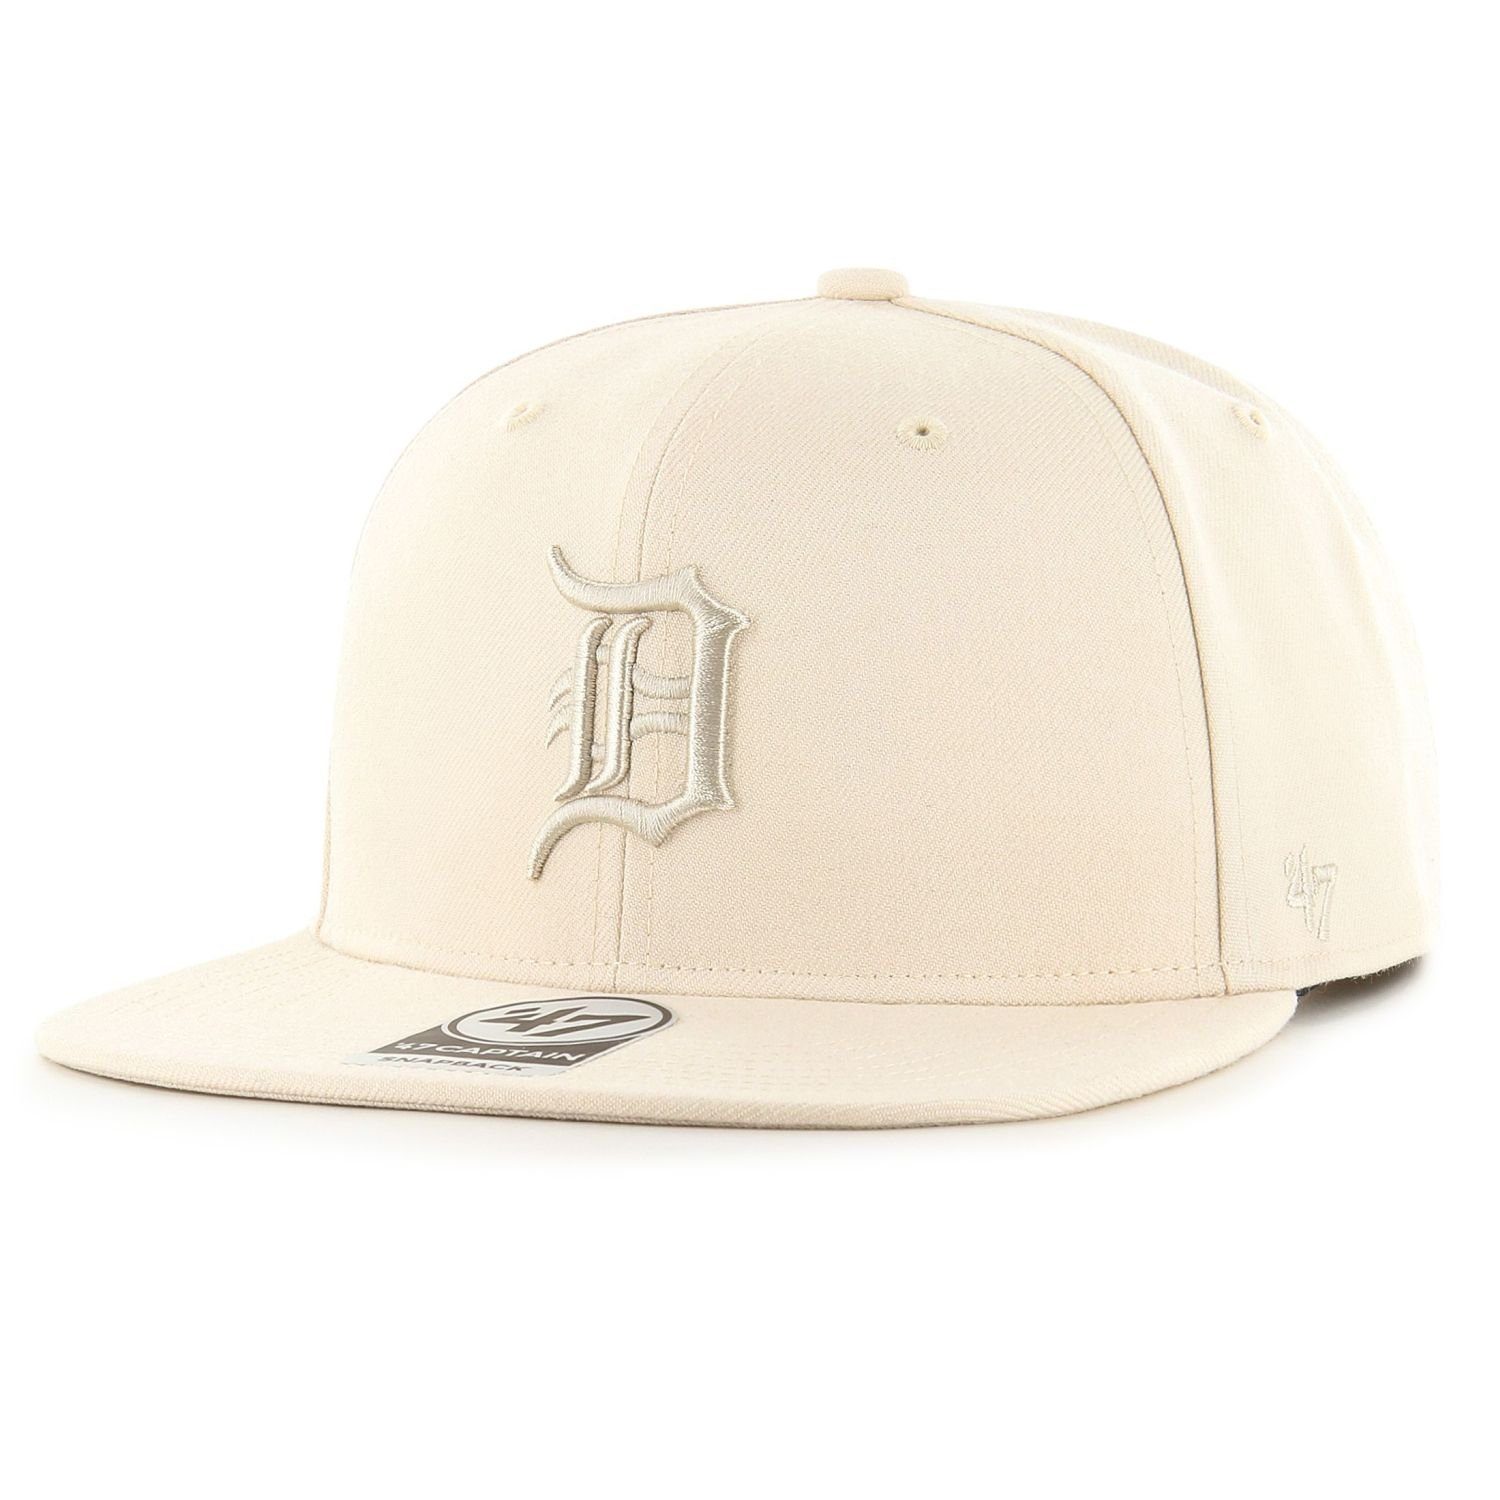 '47 Brand Snapback Cap CAPTAIN Detroit Tigers